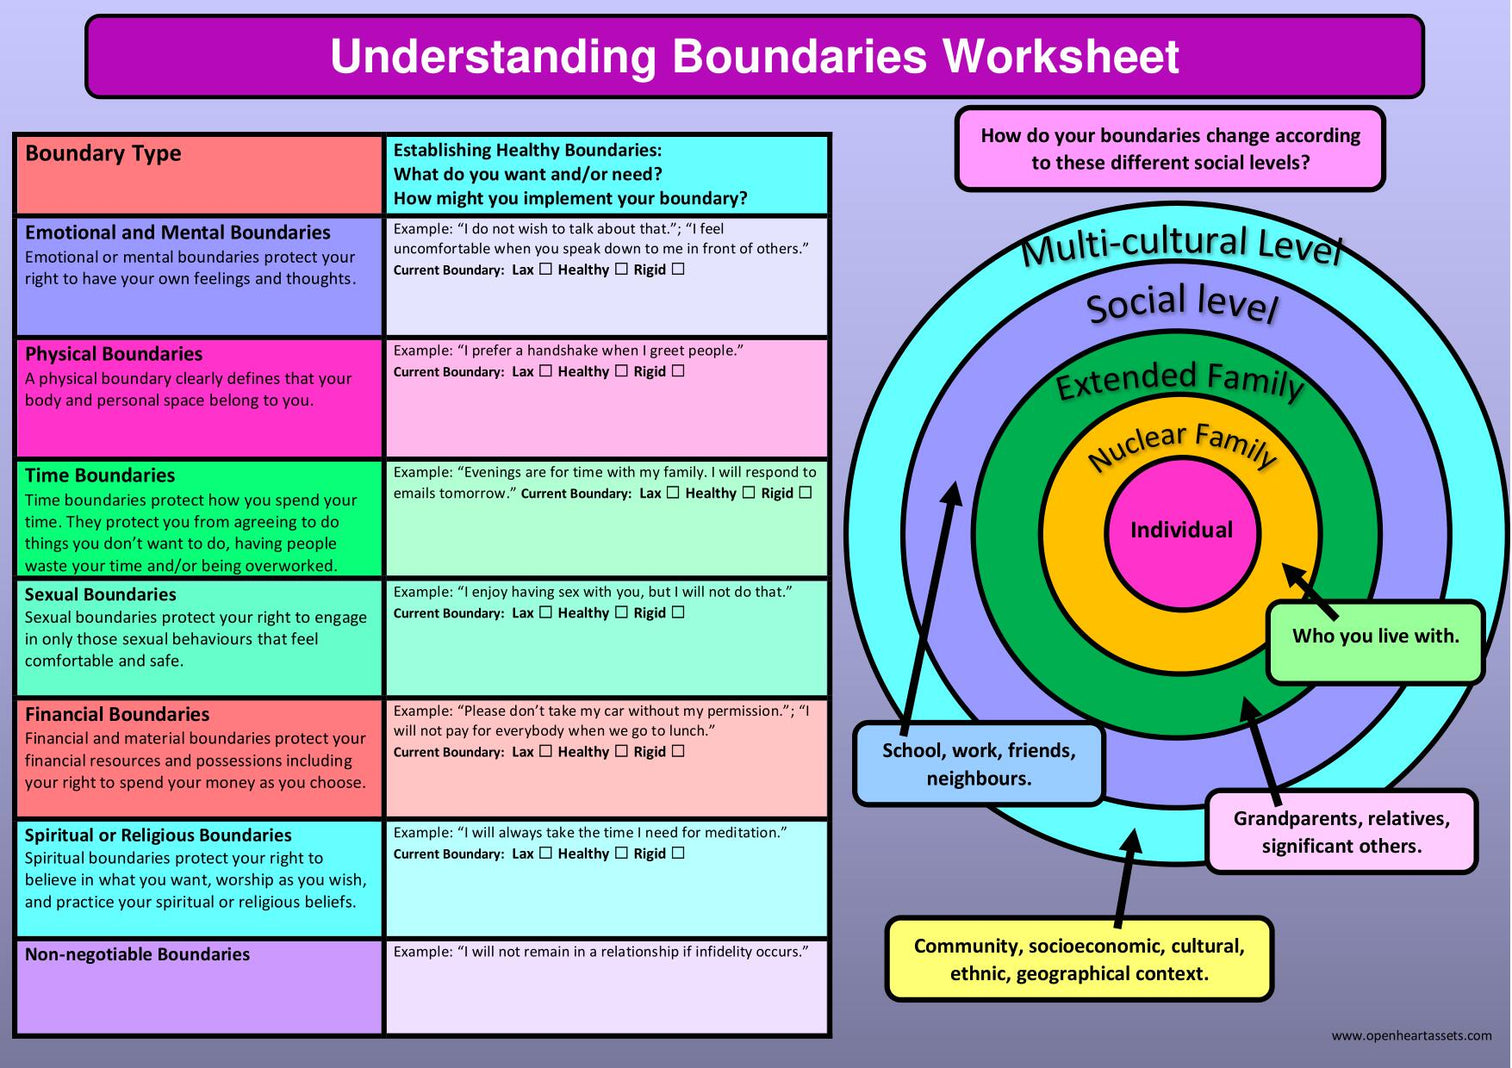 understanding-boundaries-worksheet-based-on-clinically-validated